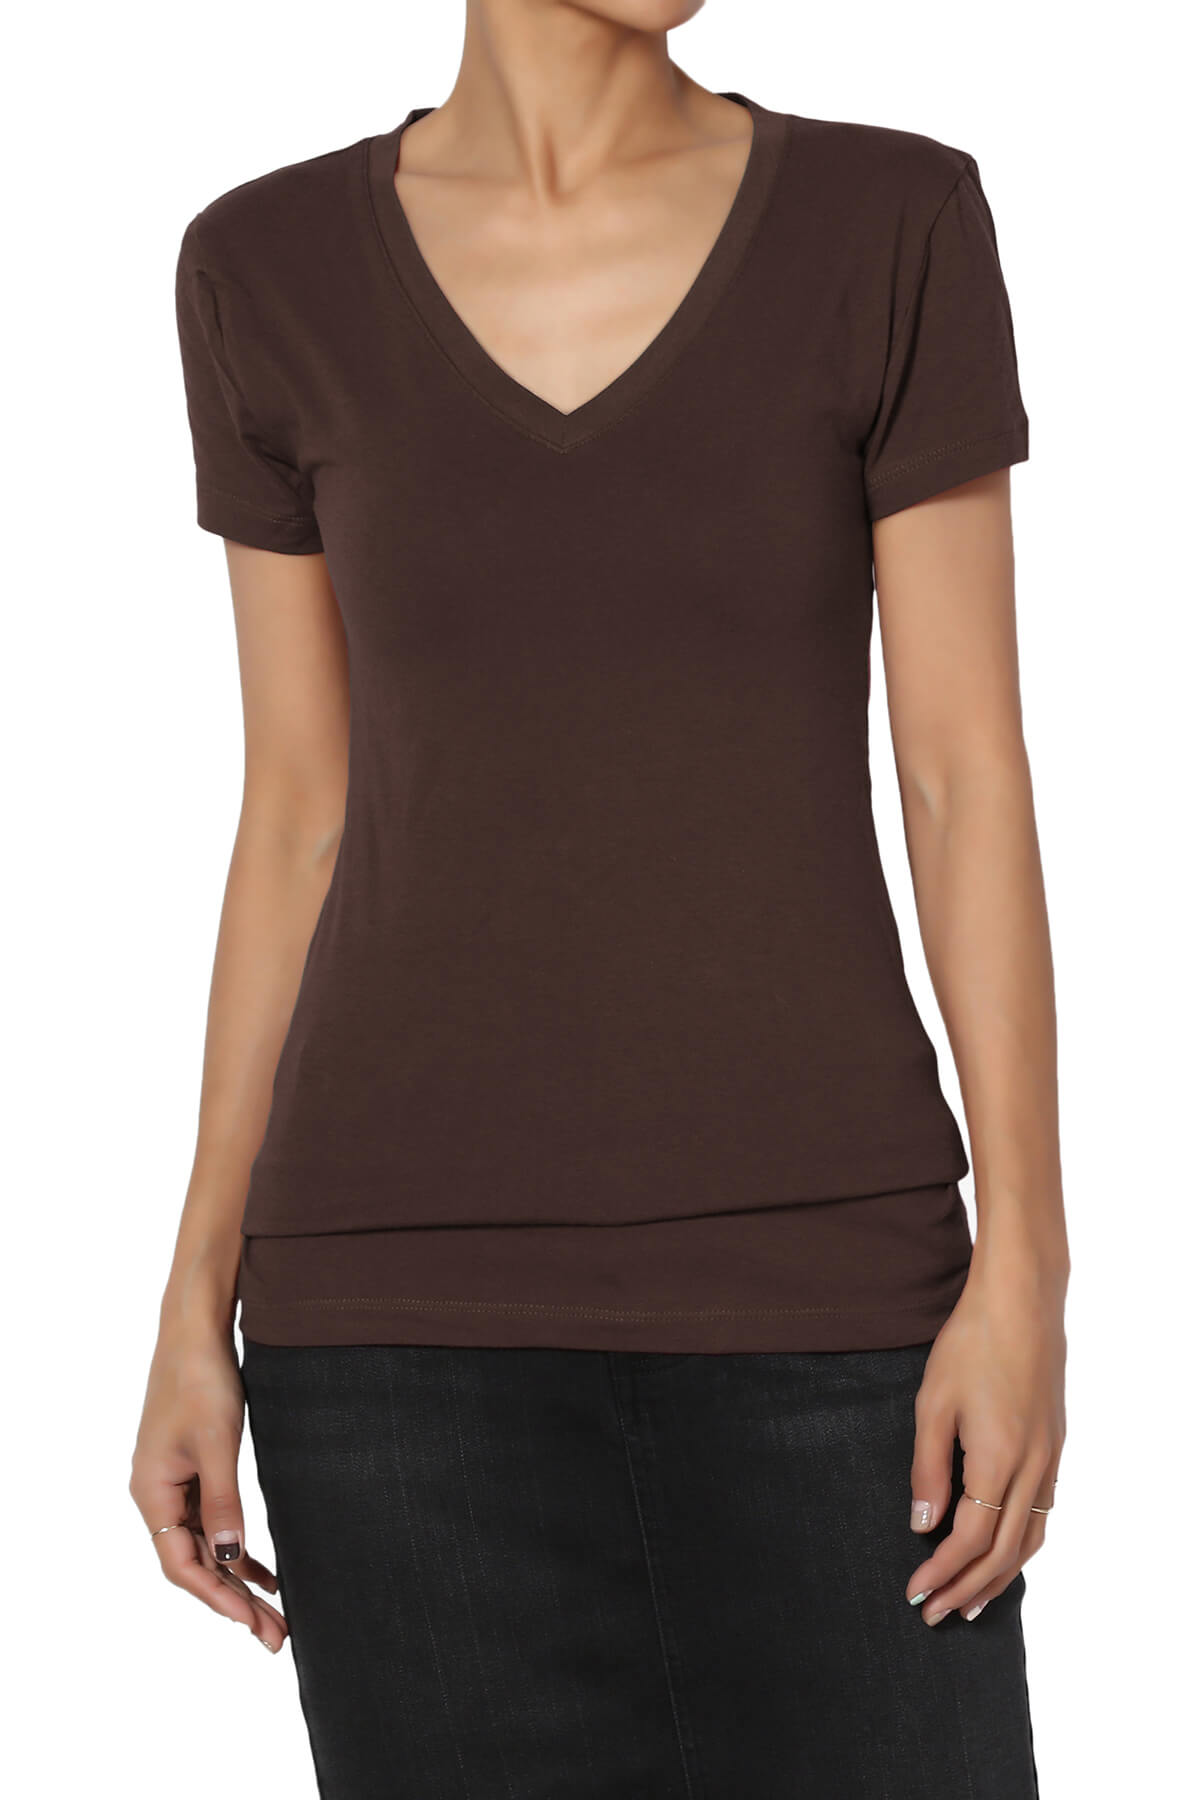 Women's Basic V Neck Short Sleeve T-Shirts Plain Stretch Cotton Spandex Top Tee - image 1 of 6